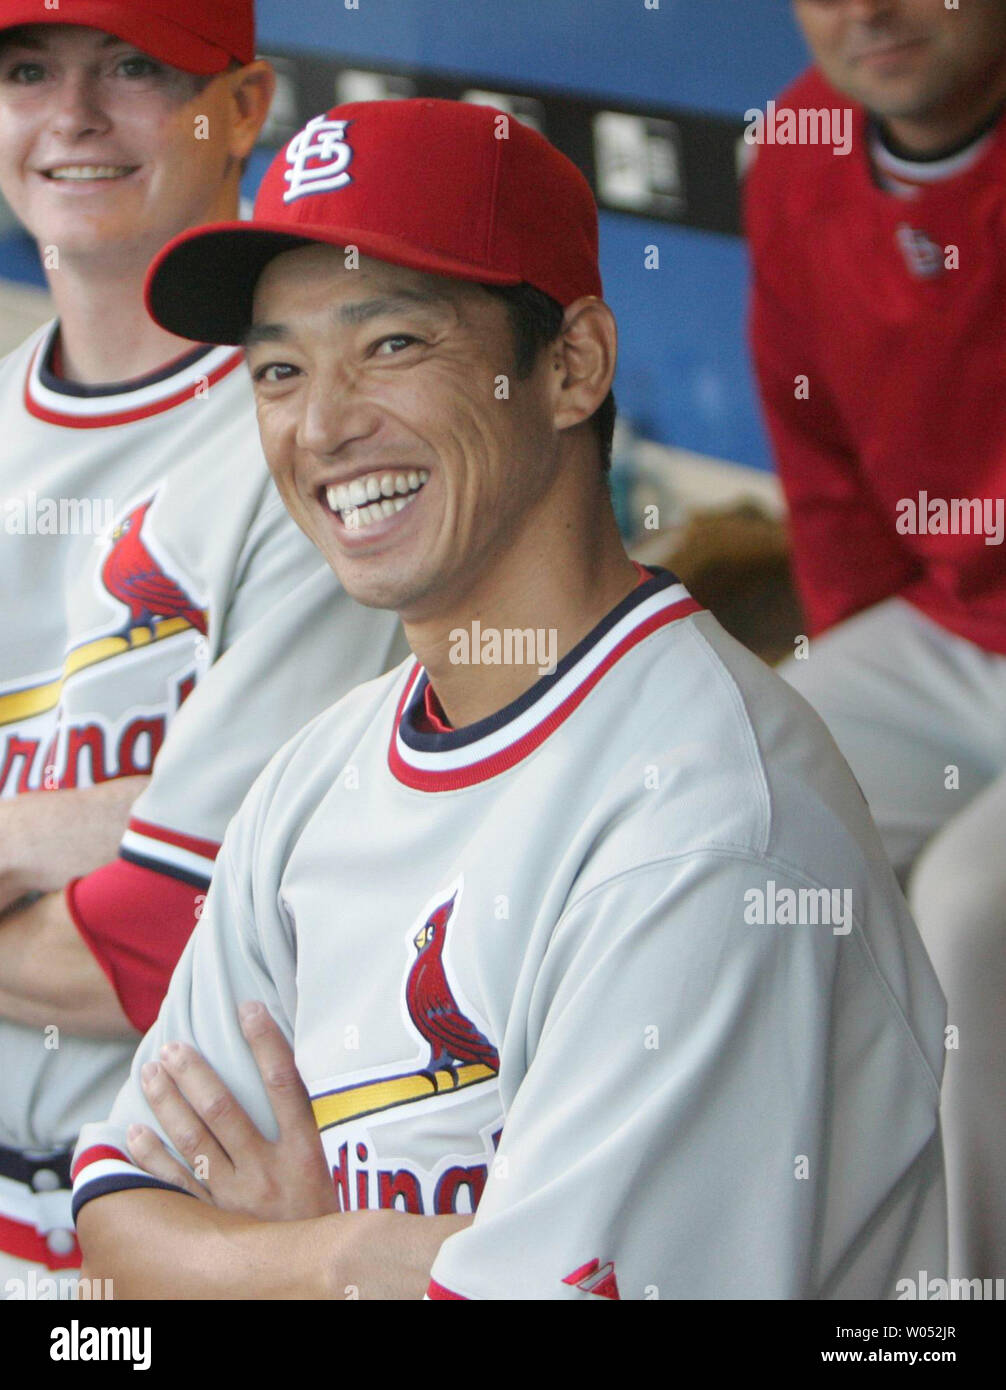 St. Louis Cardinals outfielder So Taguchi waits in the dugout